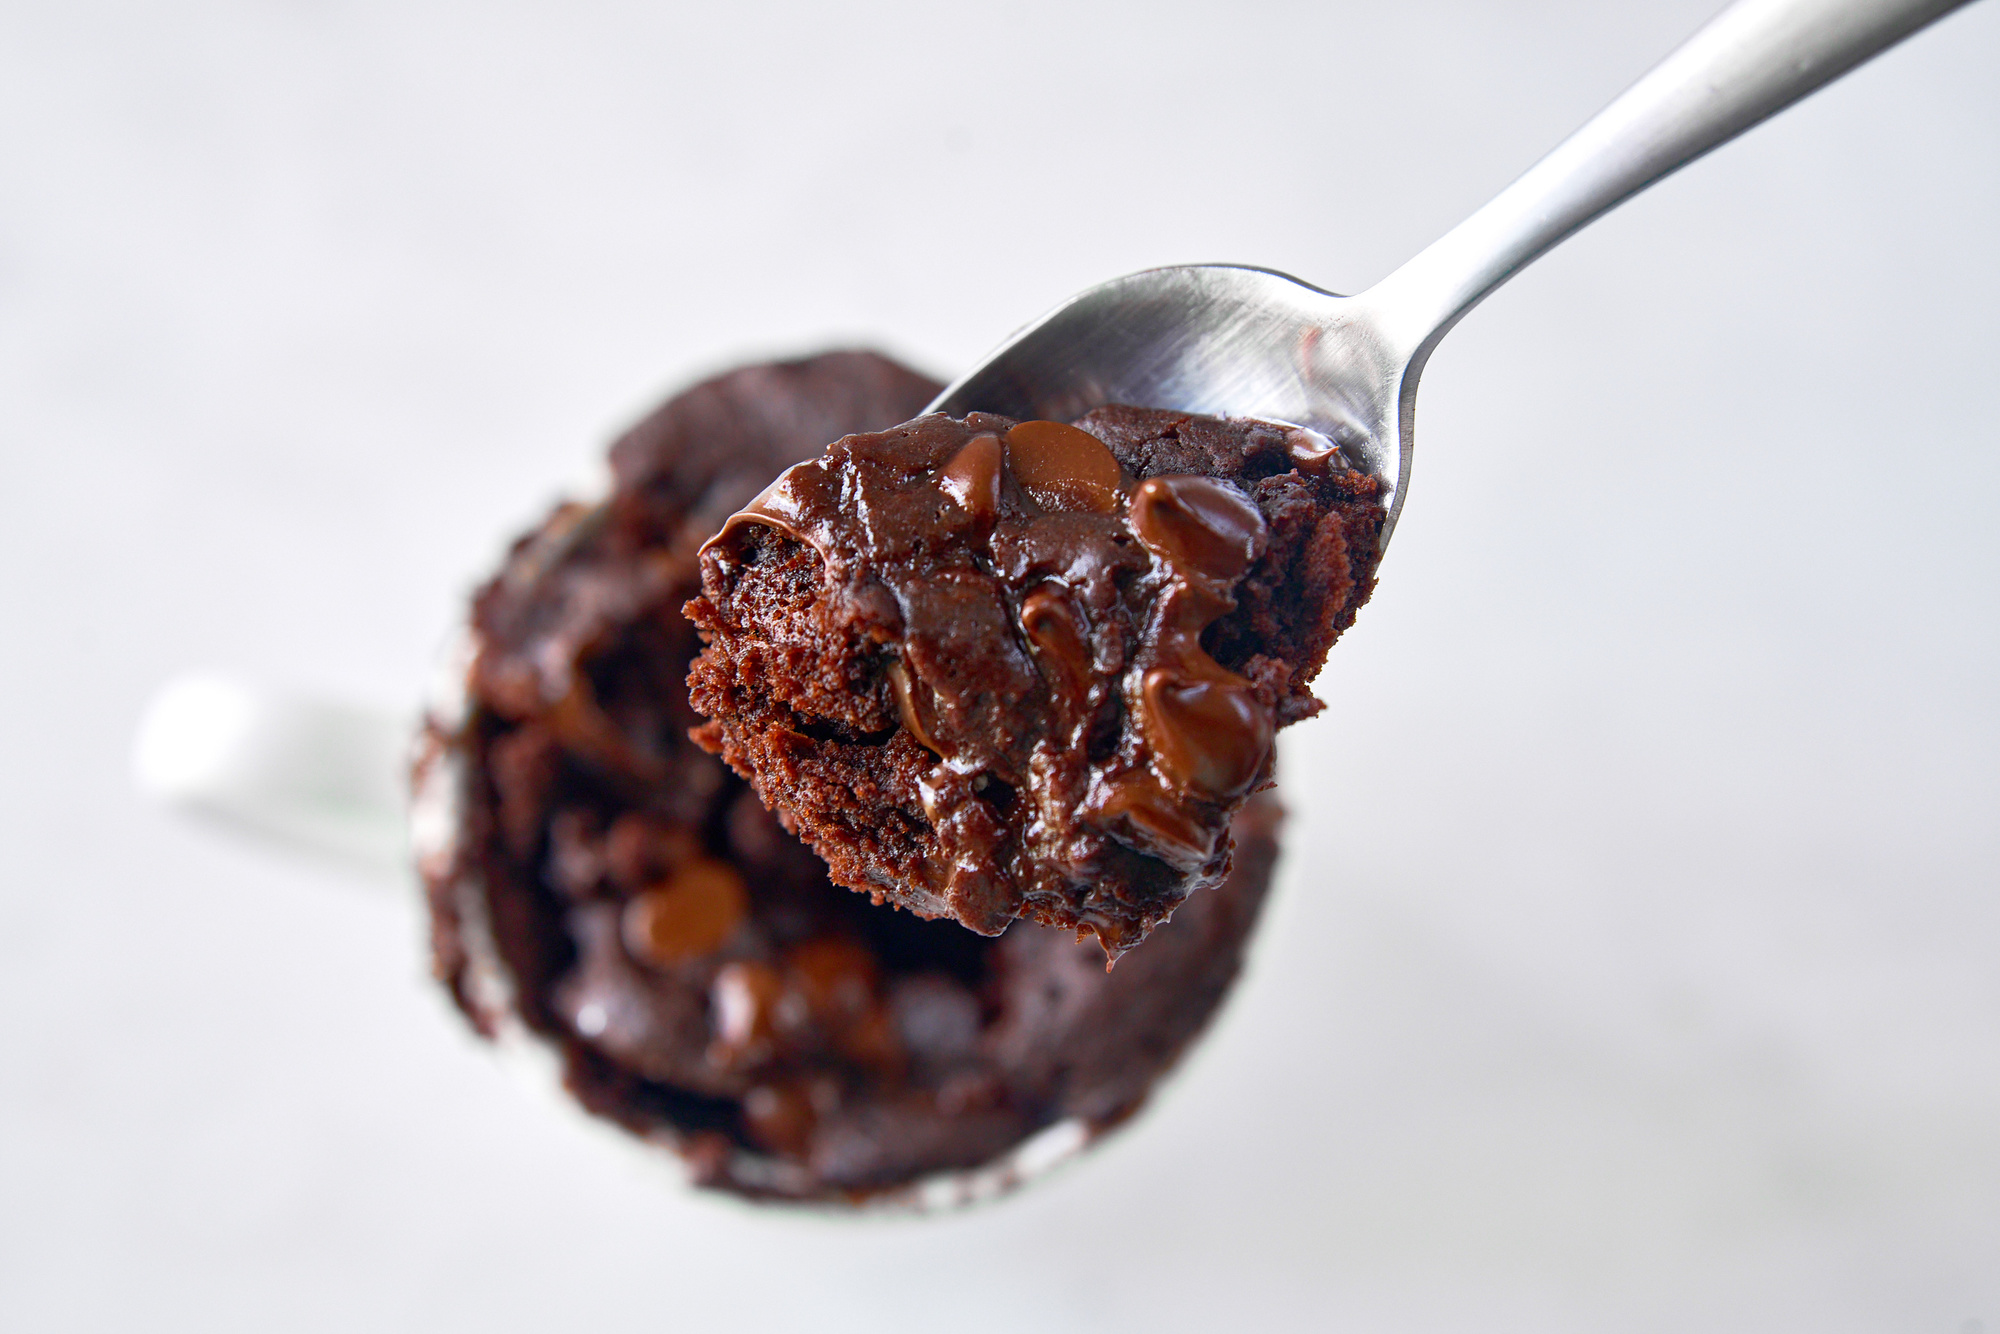 https://wowitsveggie.com/wp-content/uploads/2020/09/chocolate-vegan-mug-cake-spoon-close-header.jpg